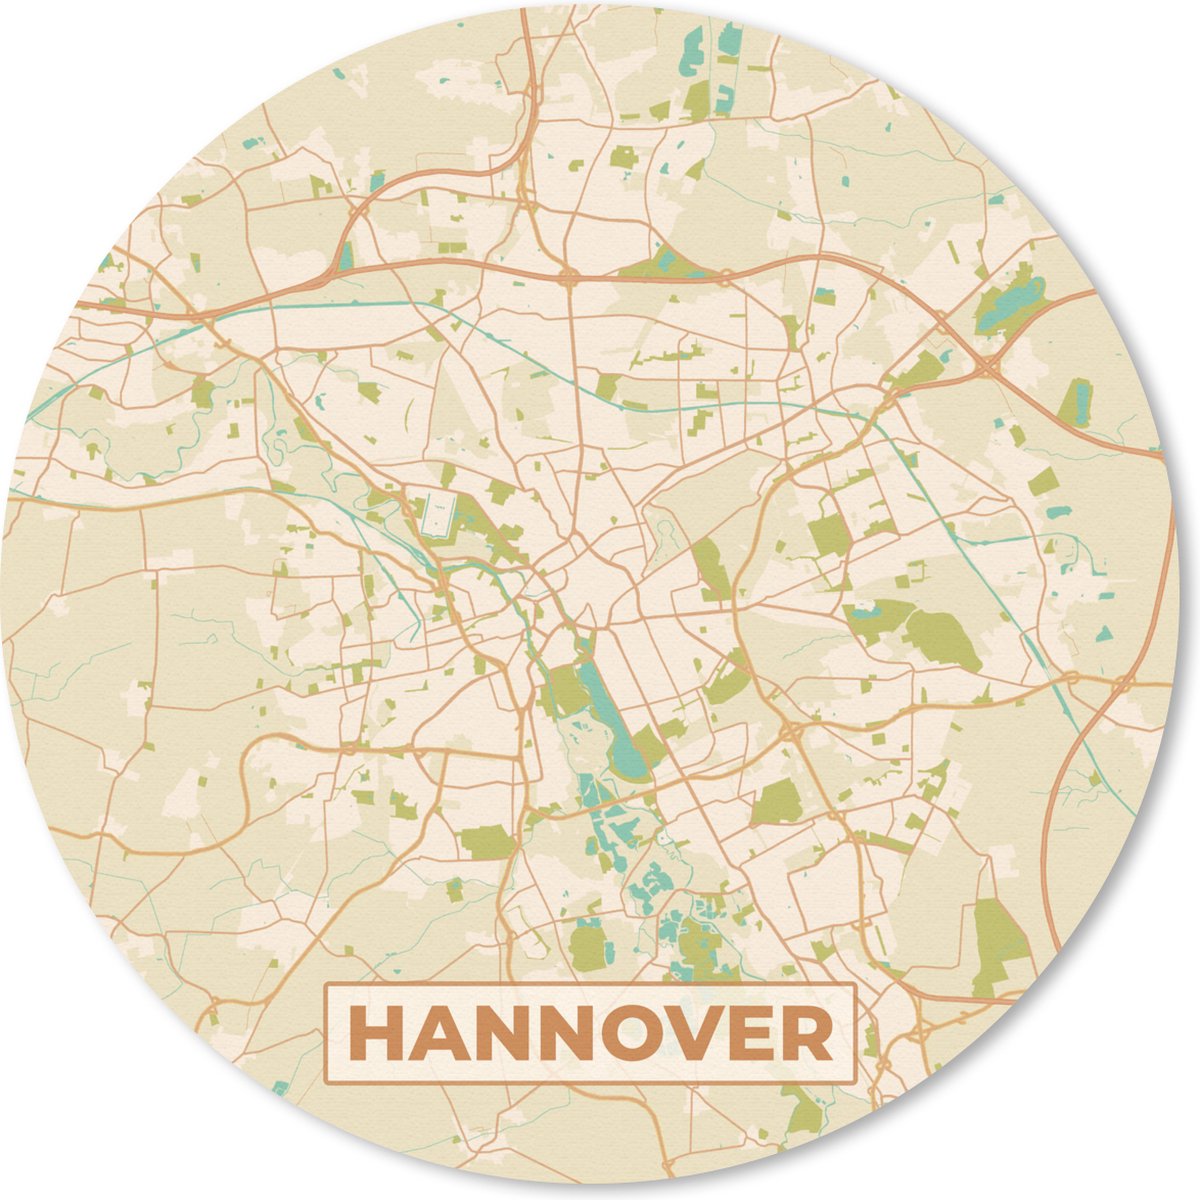 Muismat - Mousepad - Rond - Plattegrond - Hannover - Vintage - Kaart - Stadskaart - 40x40 cm - Ronde muismat